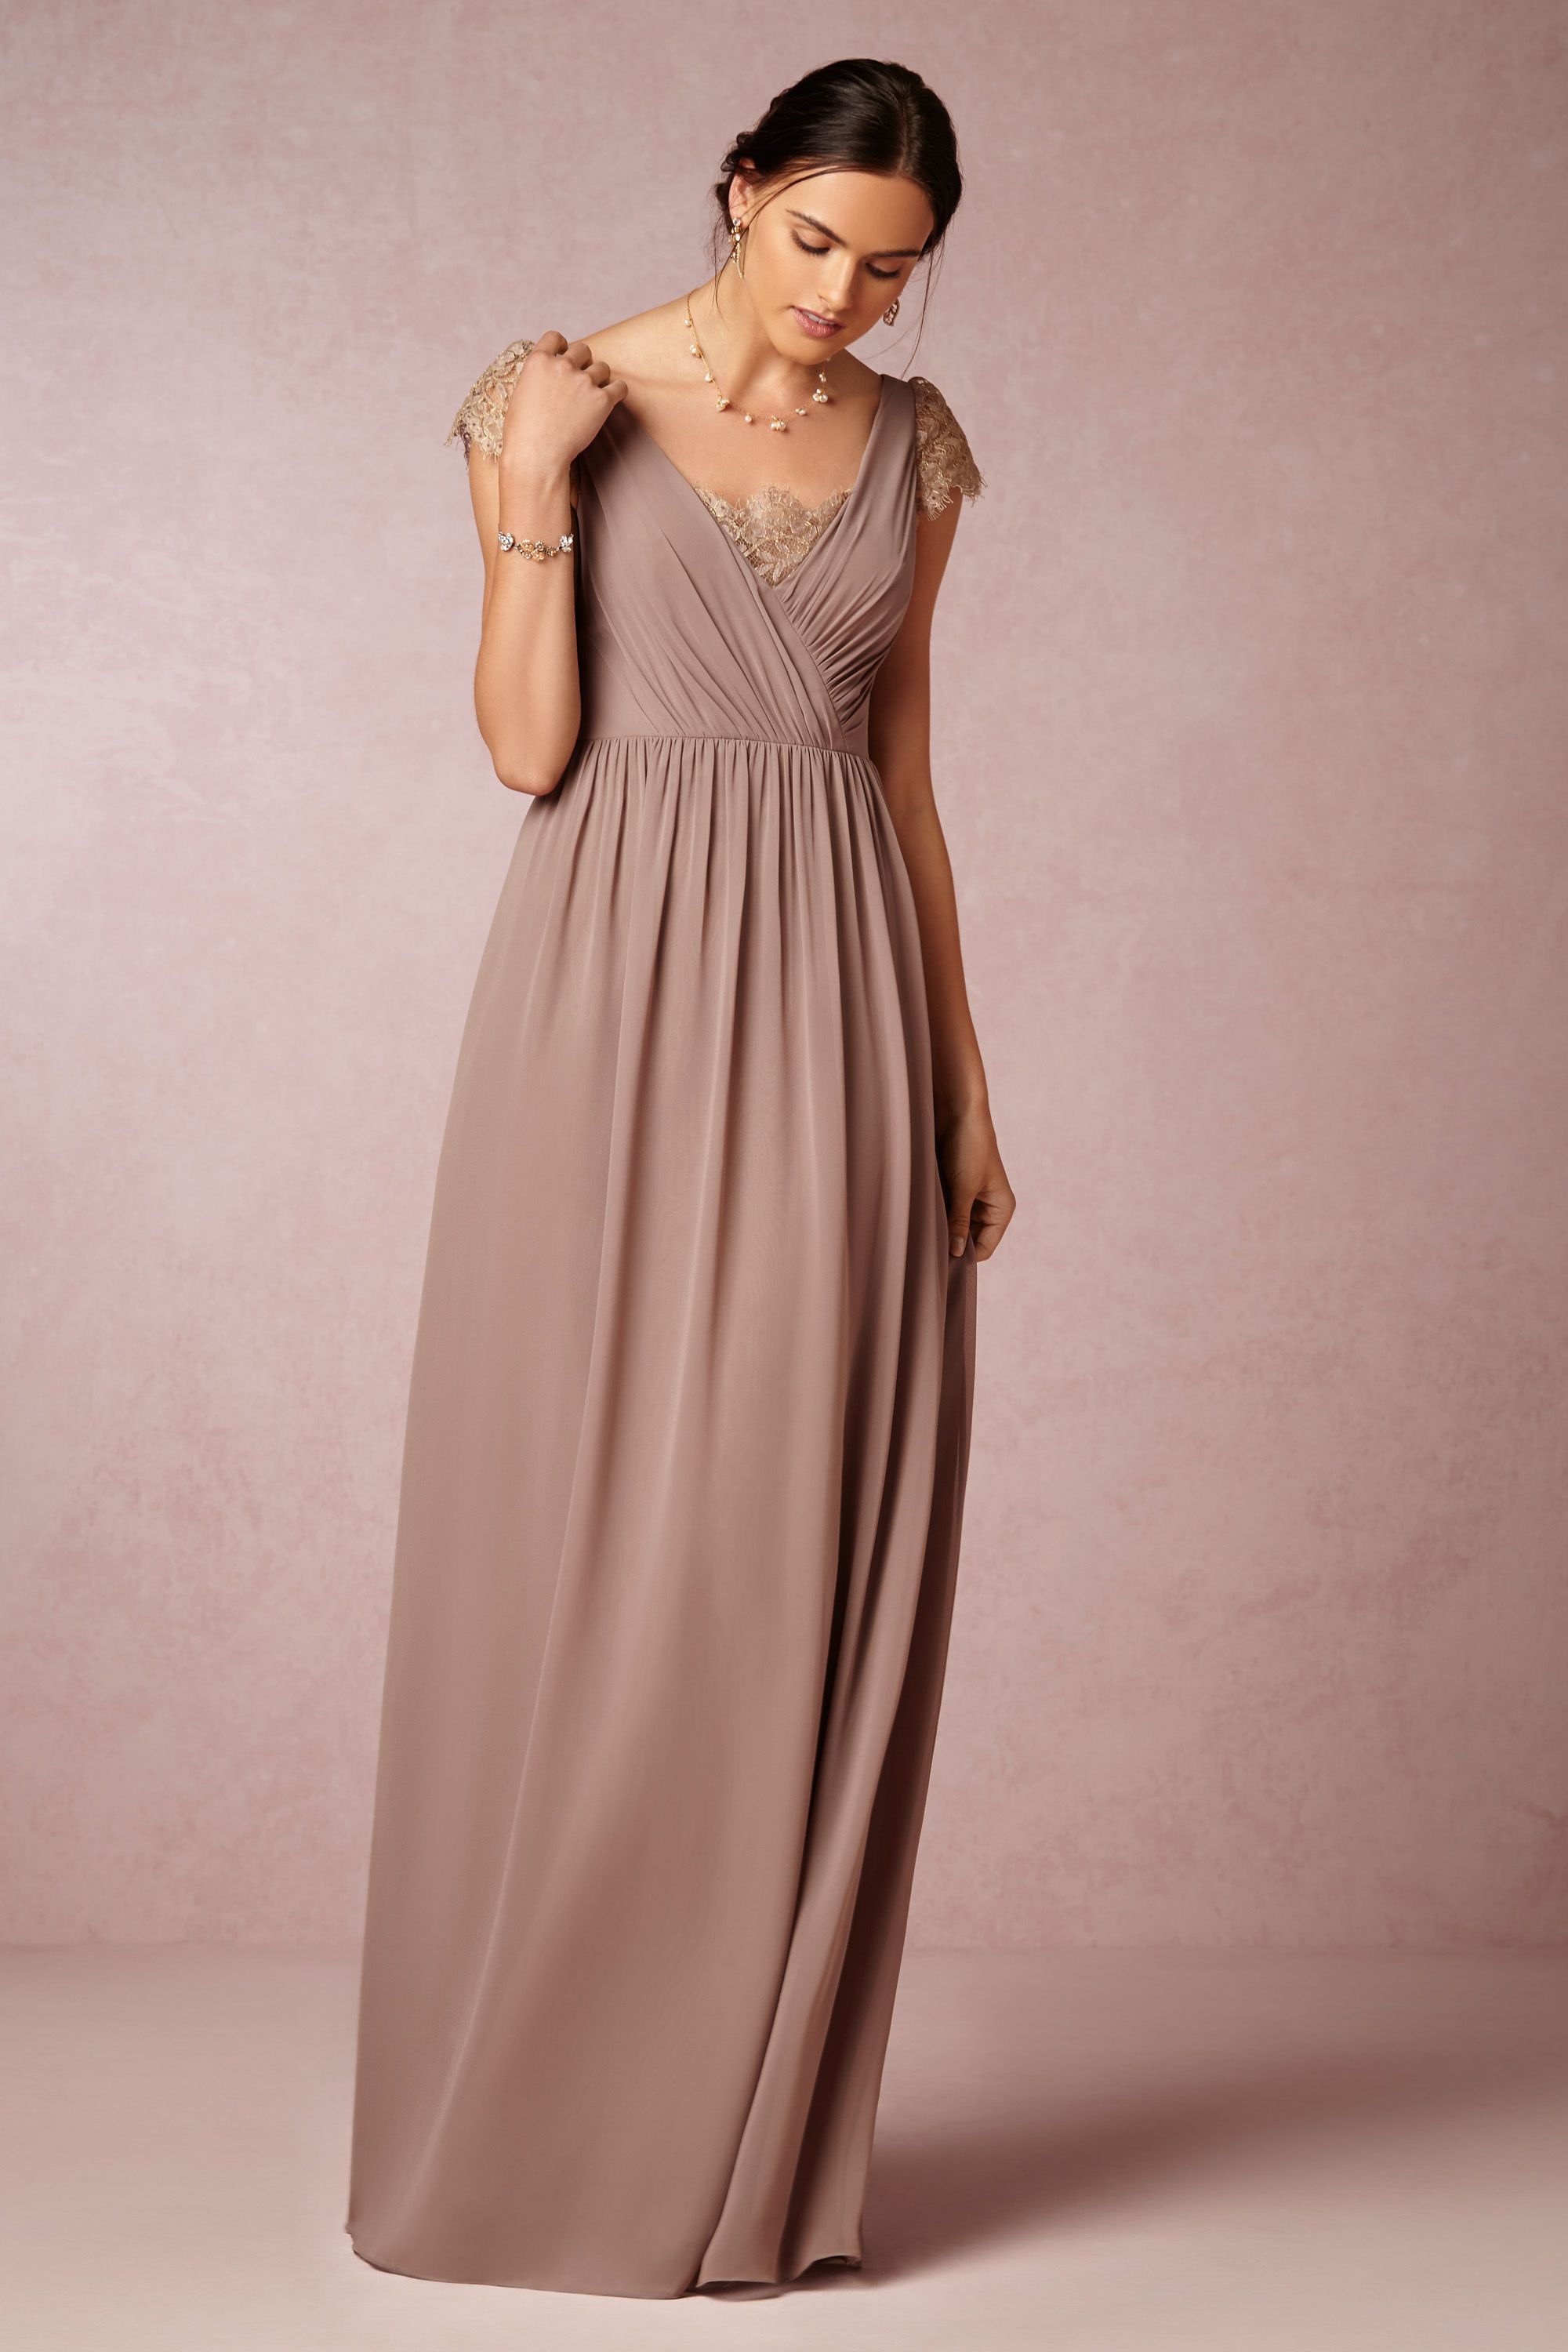 Evangeline Dress in Sale | BHLDN